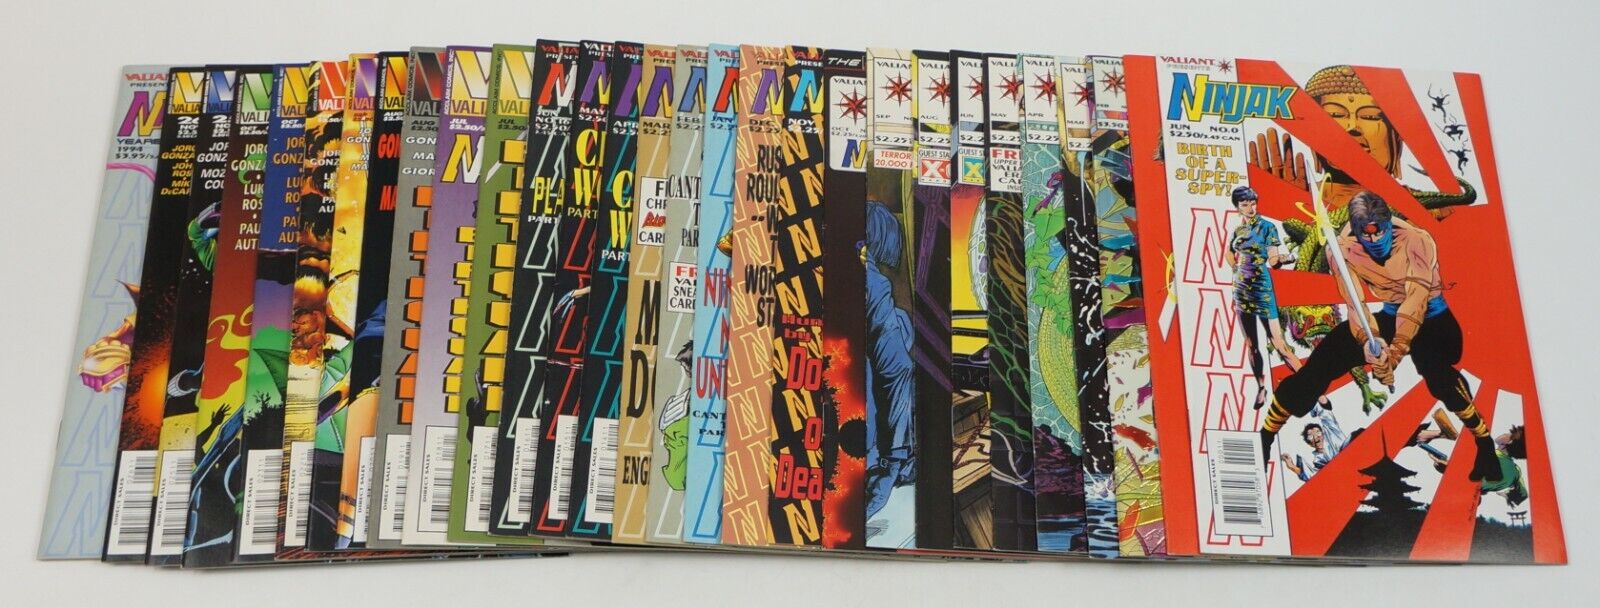 Ninjak #0 00 & 1-26 VF/NM complete series + Yearbook - Valiant comics set lot